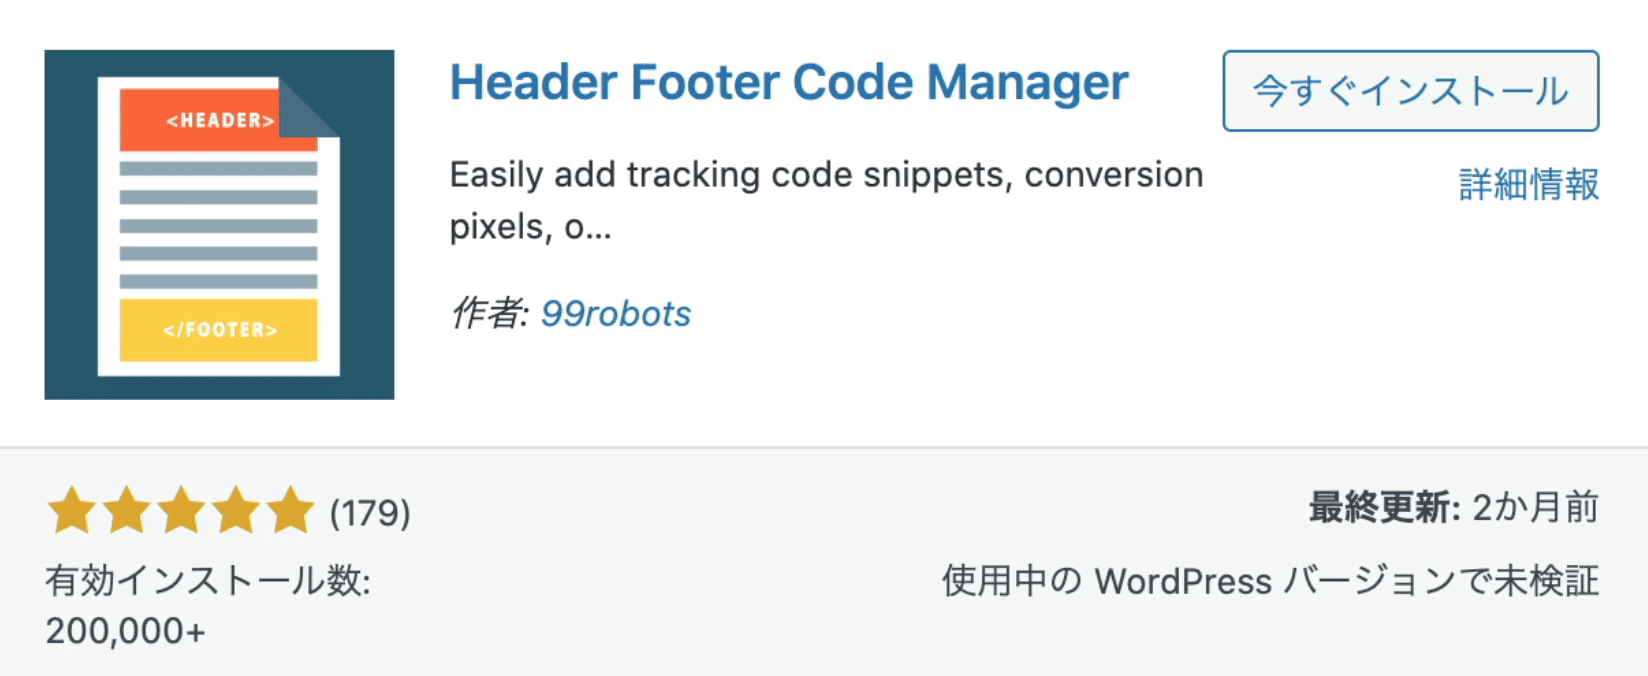 Header Footer Code Manager